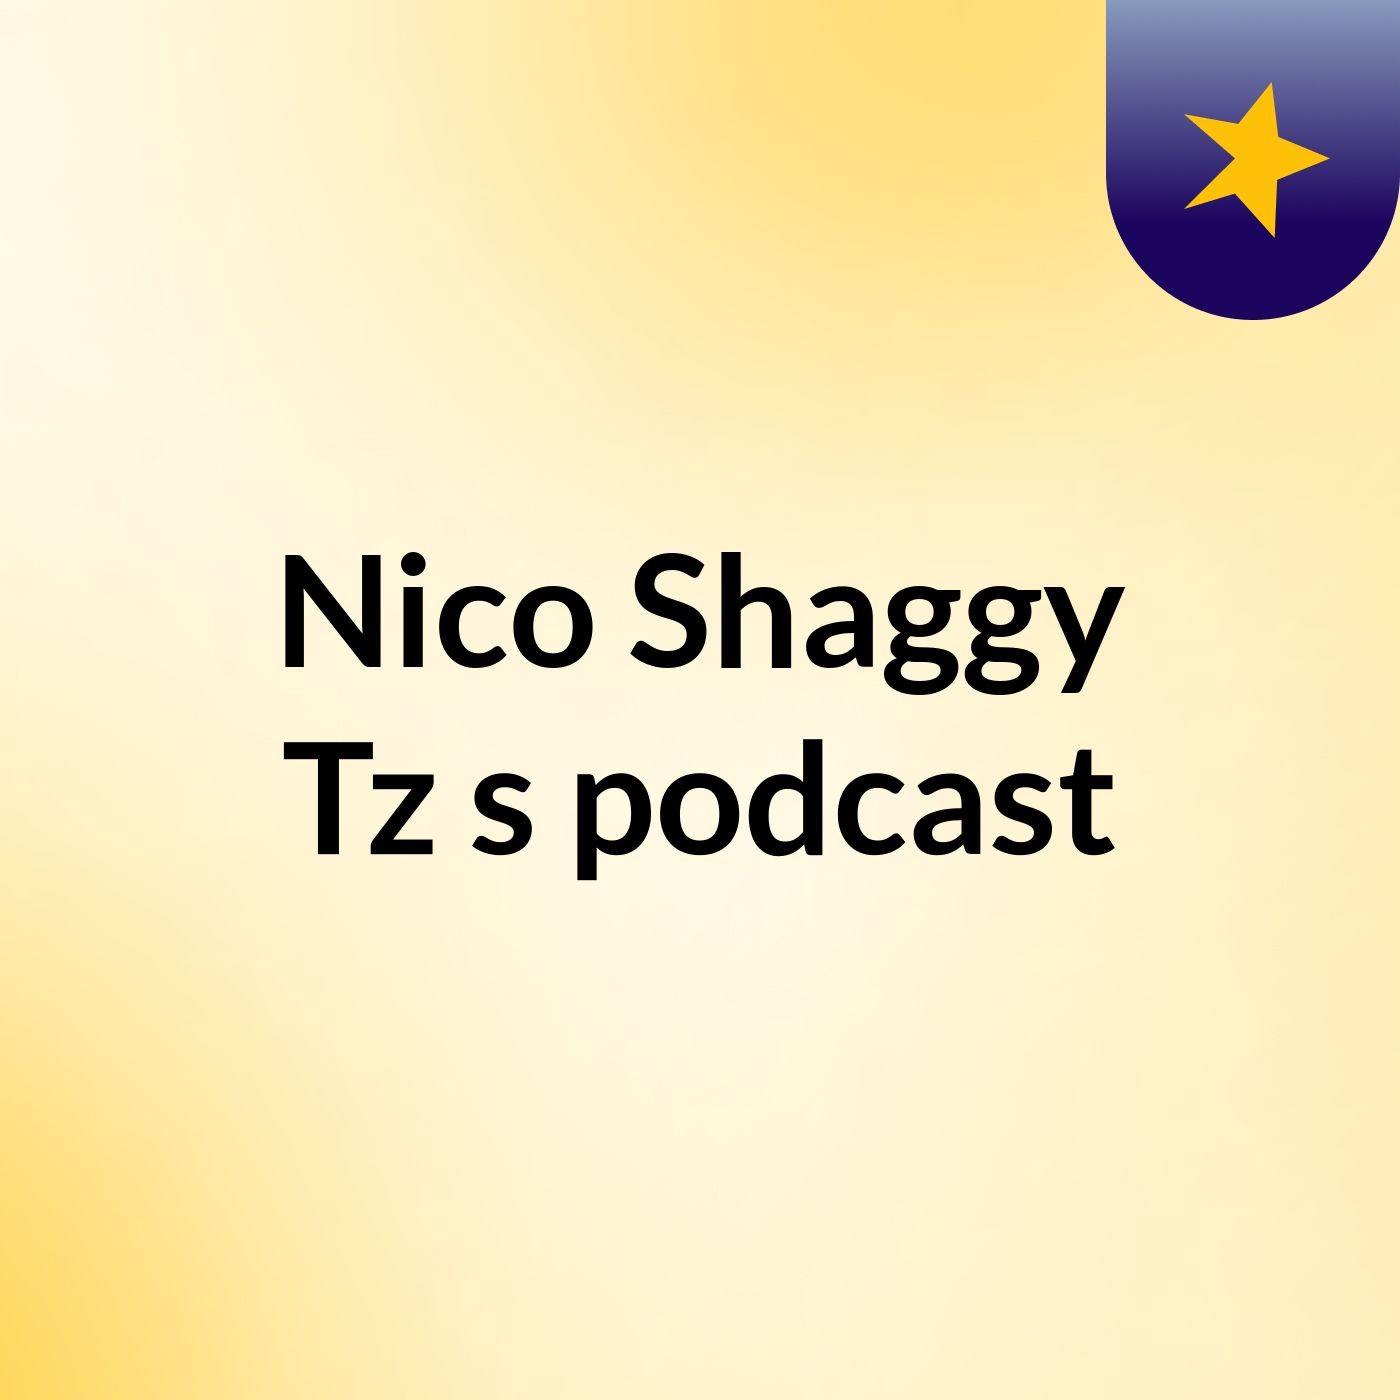 Episode 2 - Nico Shaggy Tz's podcast